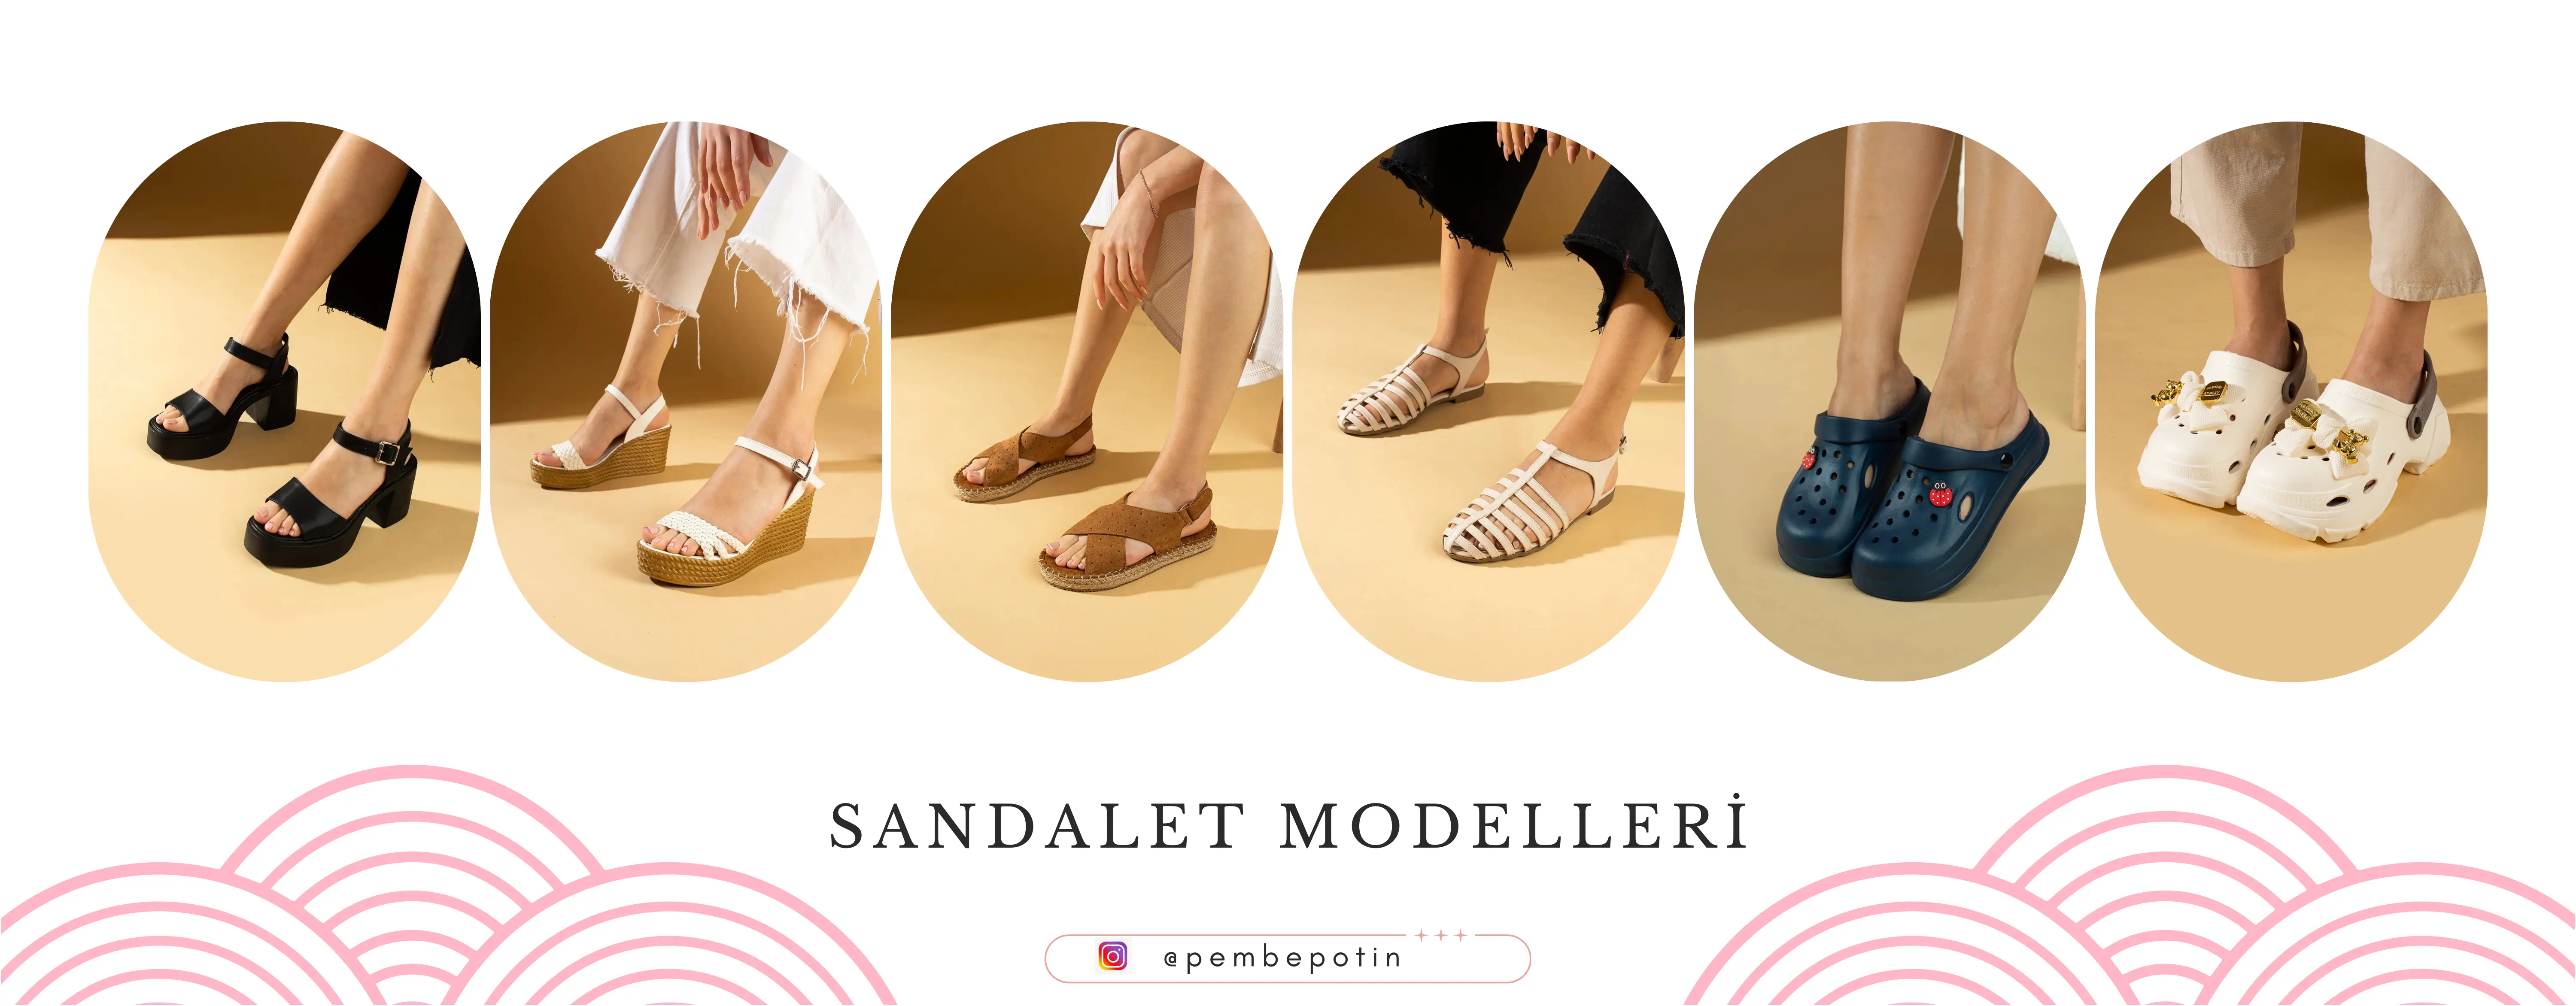 Sandaletler